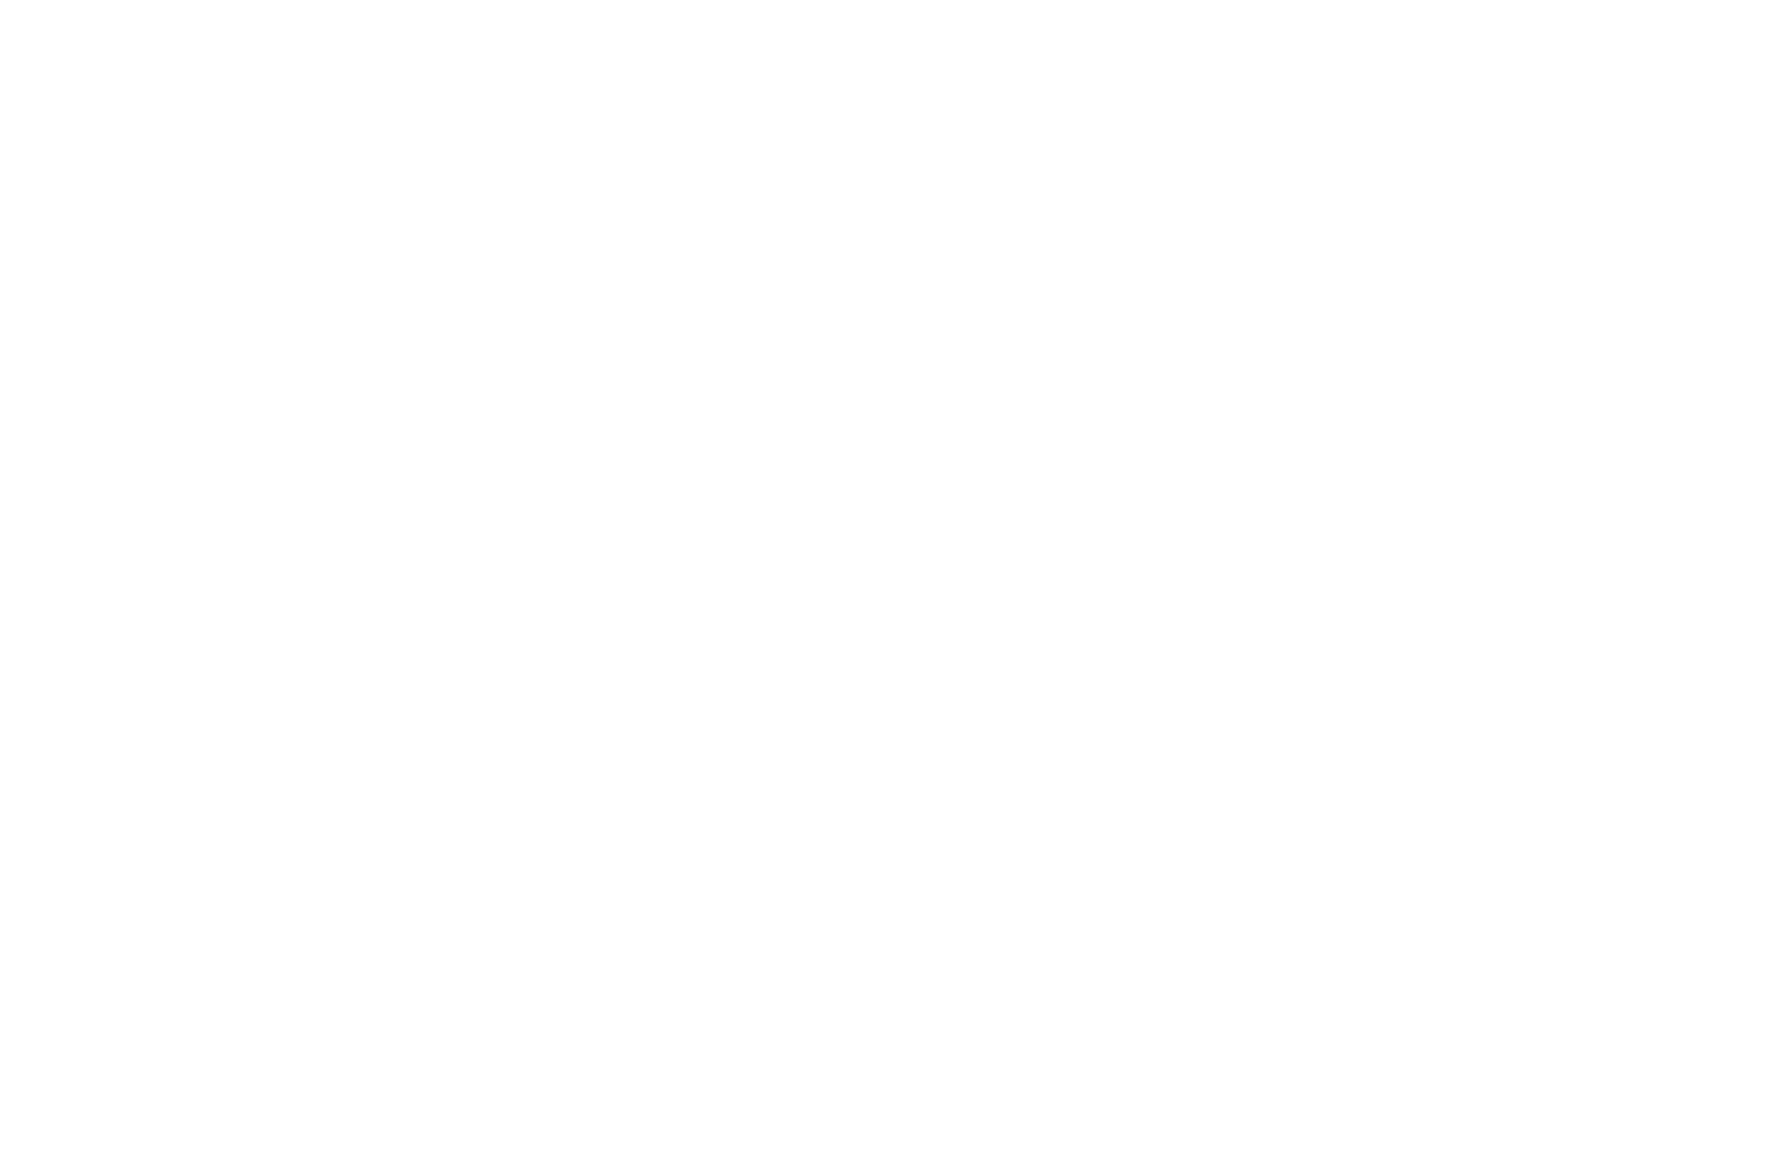 Outline of USA map